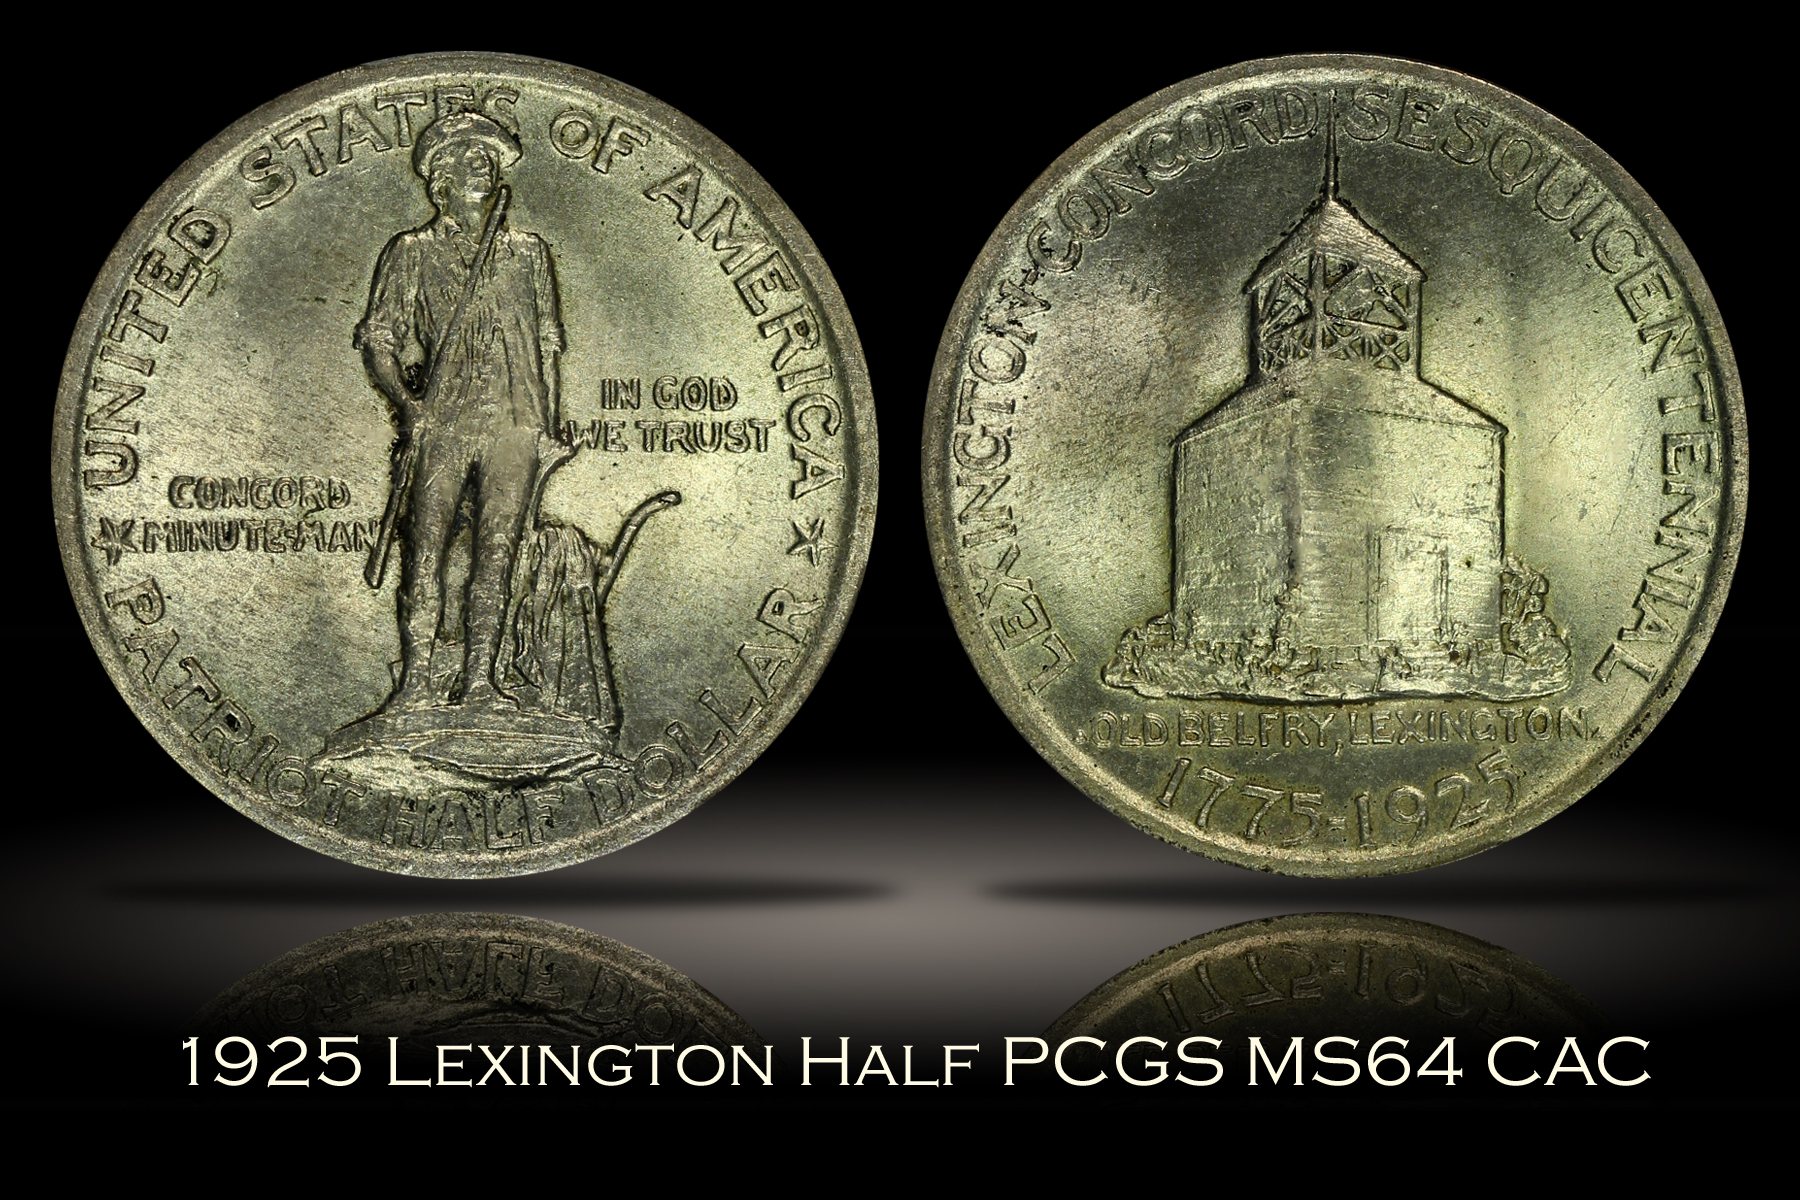 1925 Lexington Half PCGS MS64 CAC w/ Wooden Box